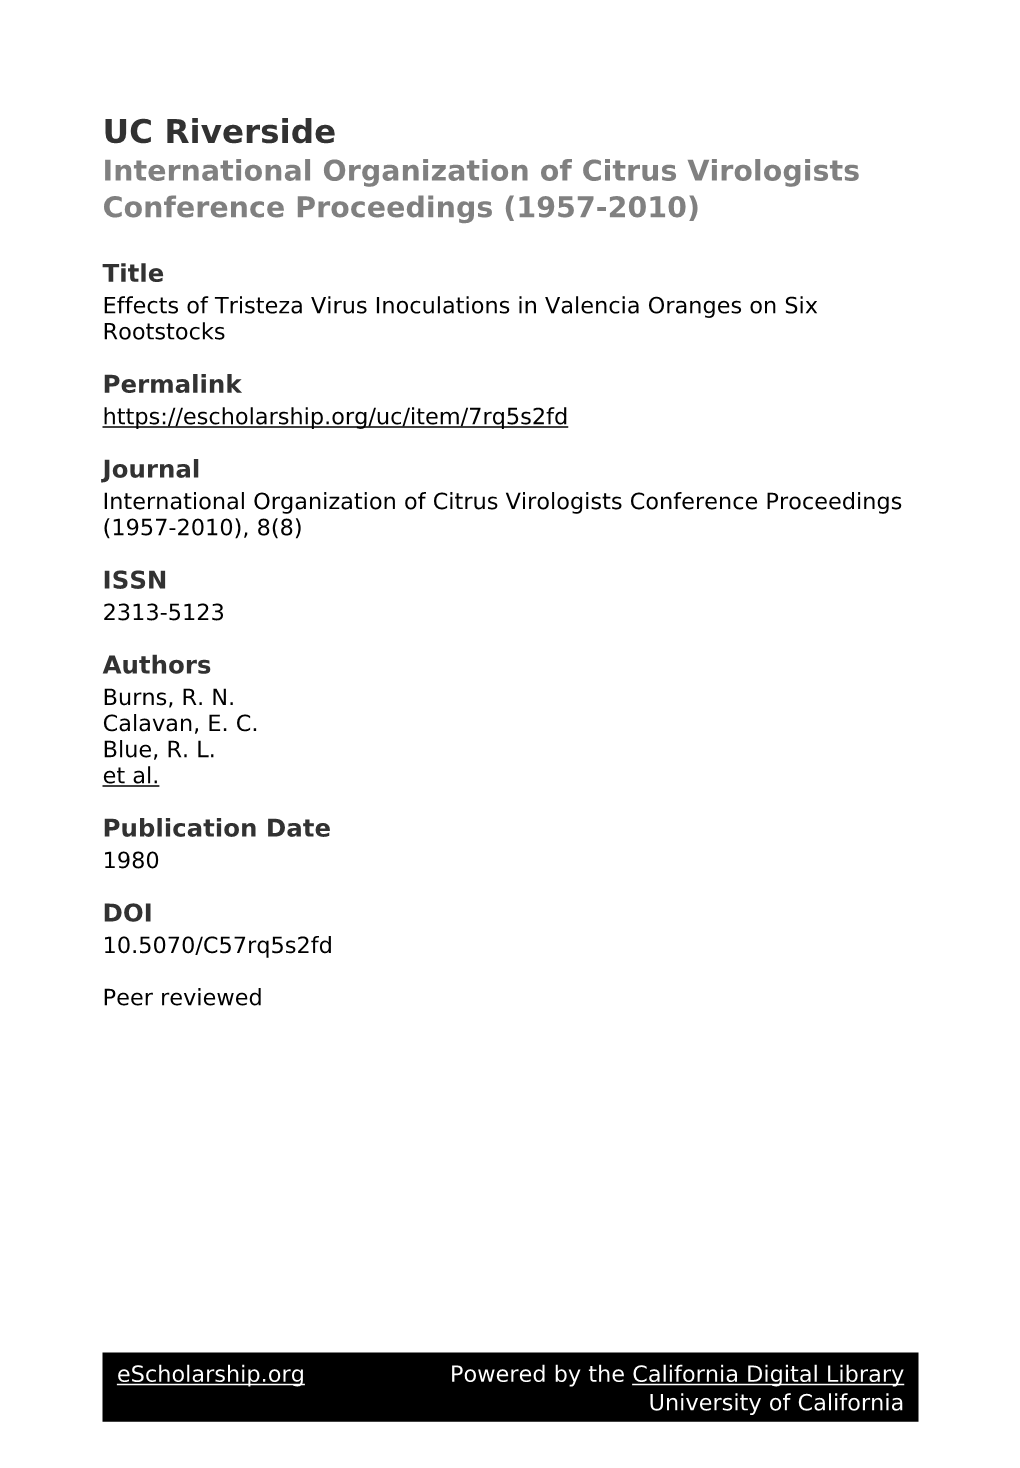 UC Riverside International Organization of Citrus Virologists Conference Proceedings (1957-2010)